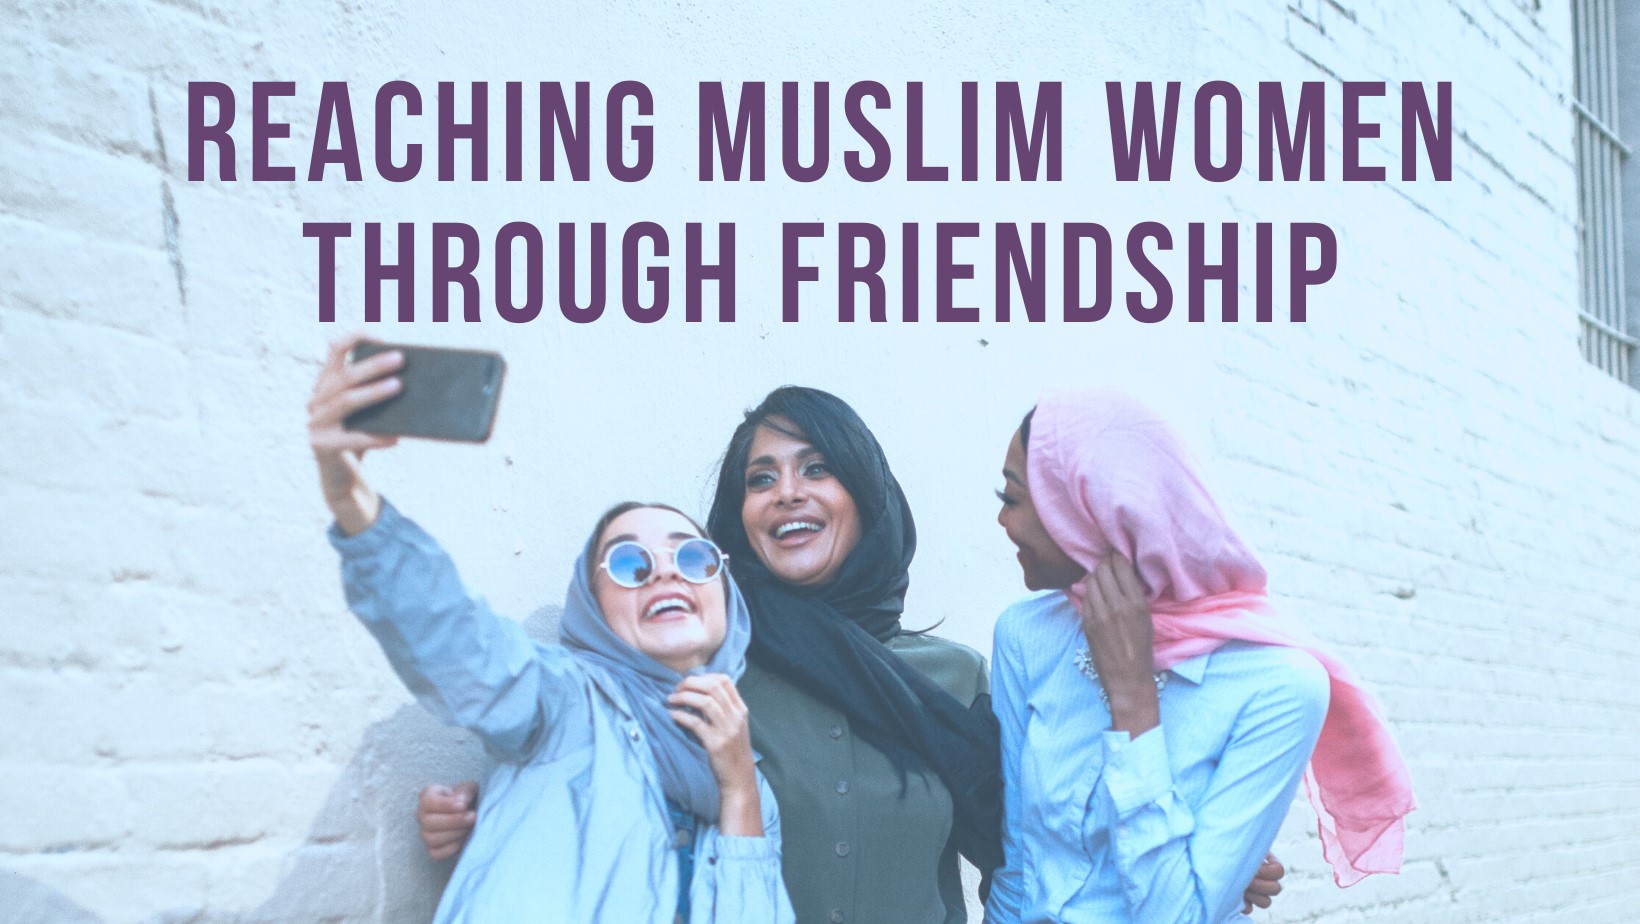 Reaching Muslim women through friendship